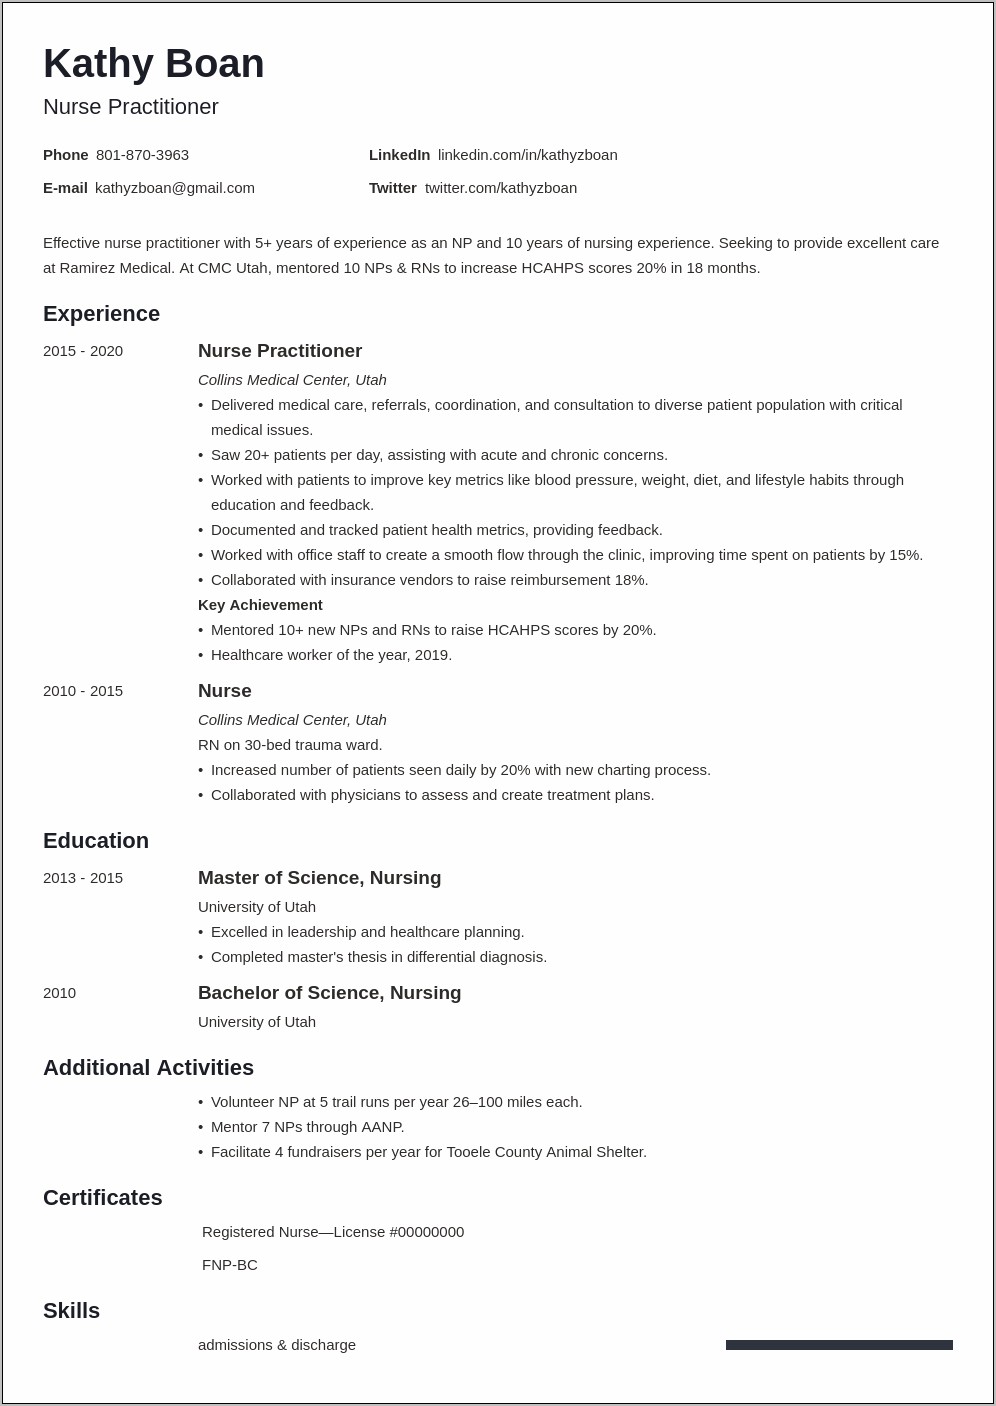 Resume For Nurse Practitioner Objectives